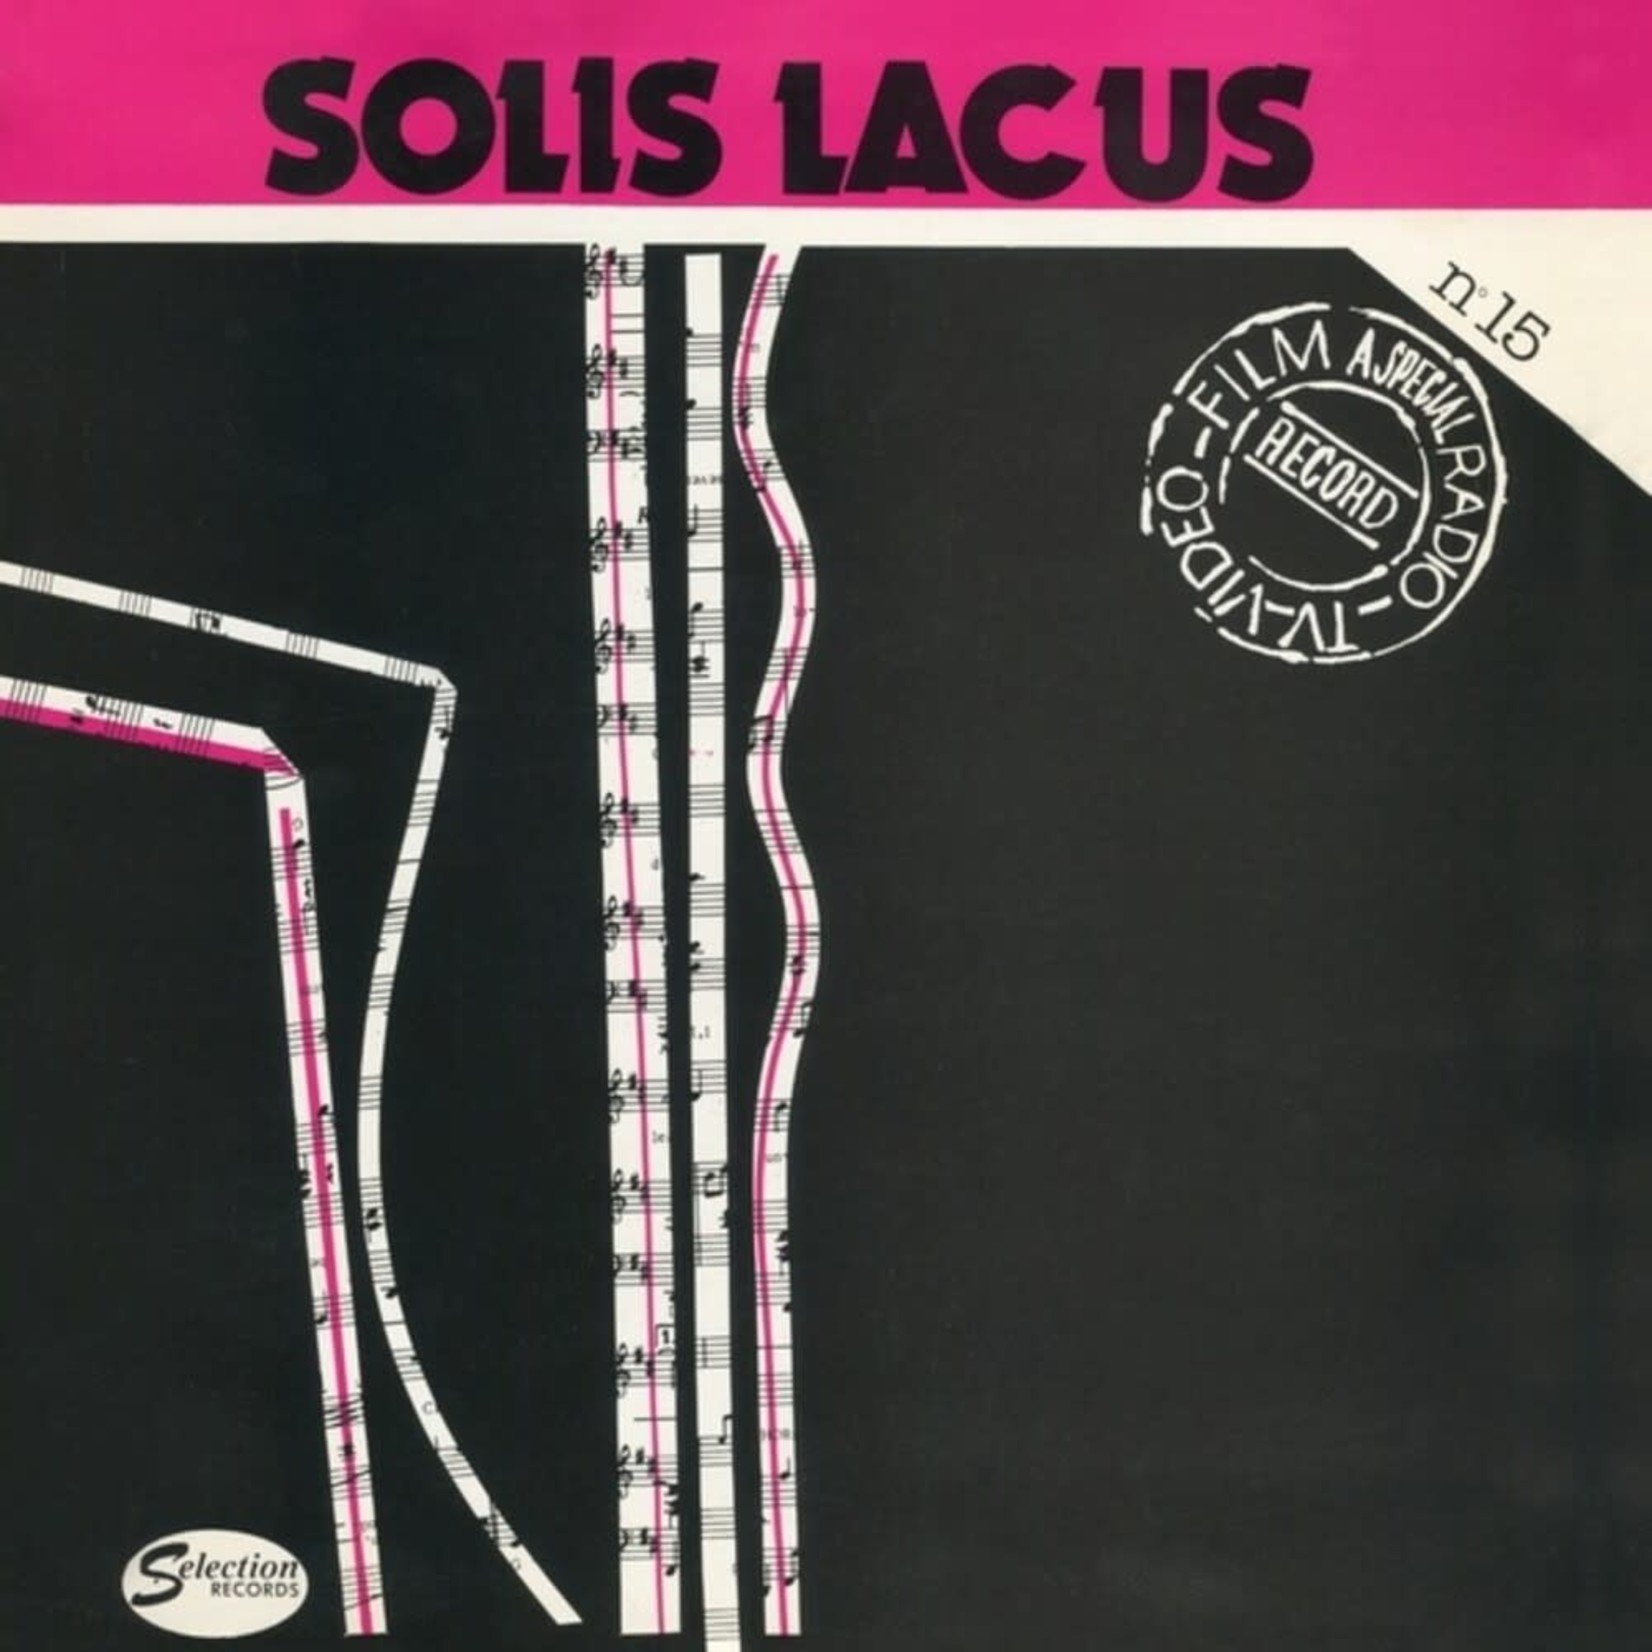 [New] Solis Lacus - Solis Lacus (A Special Radio - TV Record - N15)